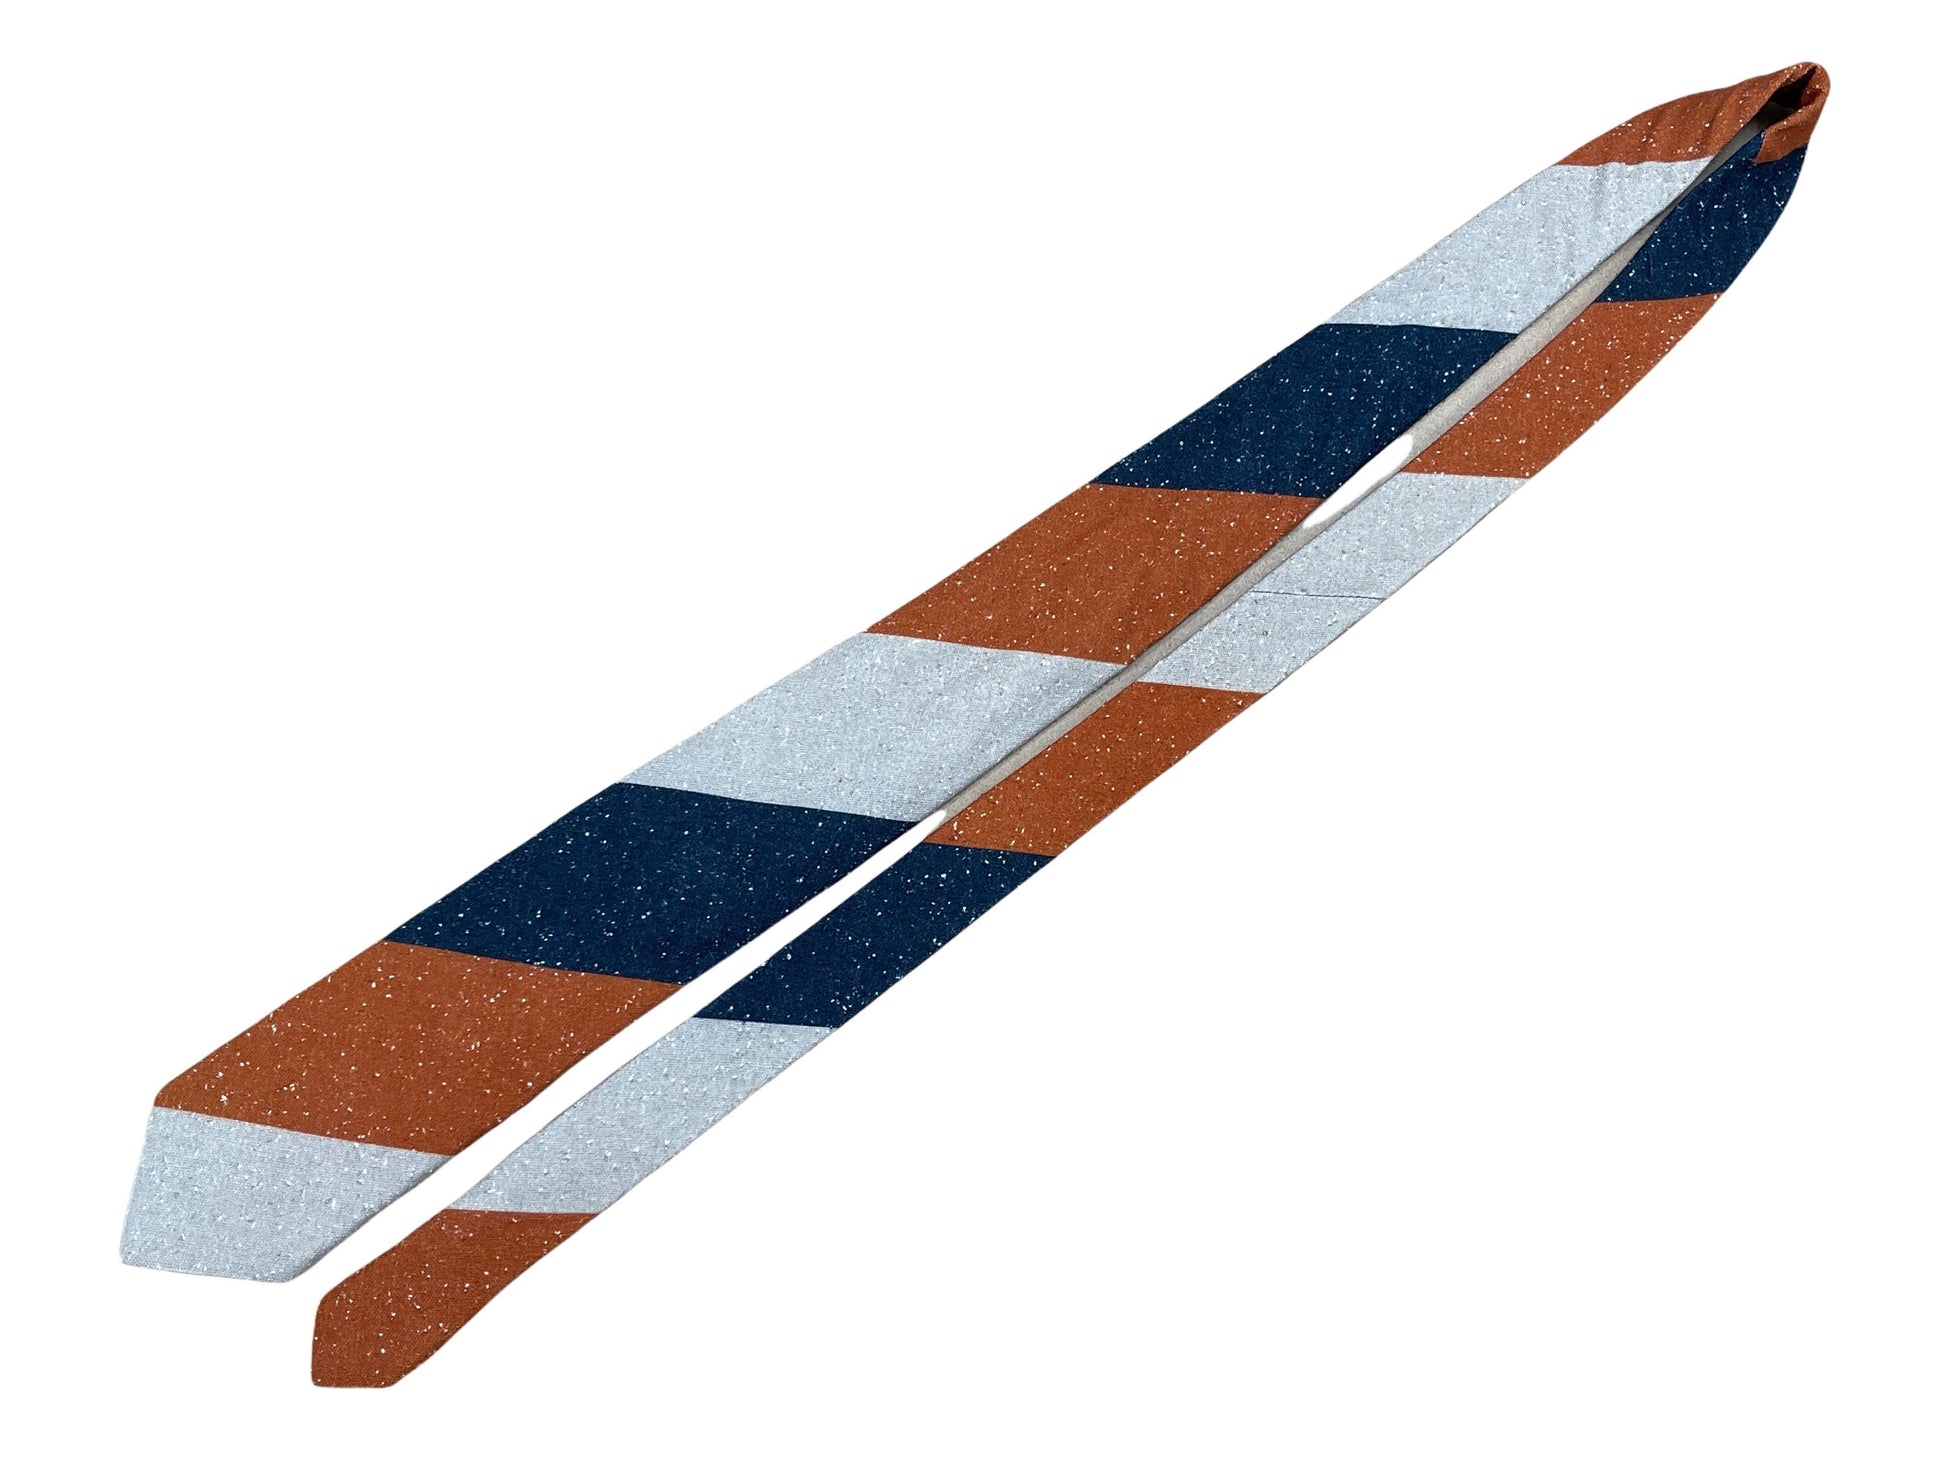 Stenstroms Donegal striped silk tie, navy, tan, and orange. Genuine Design luxury consignment